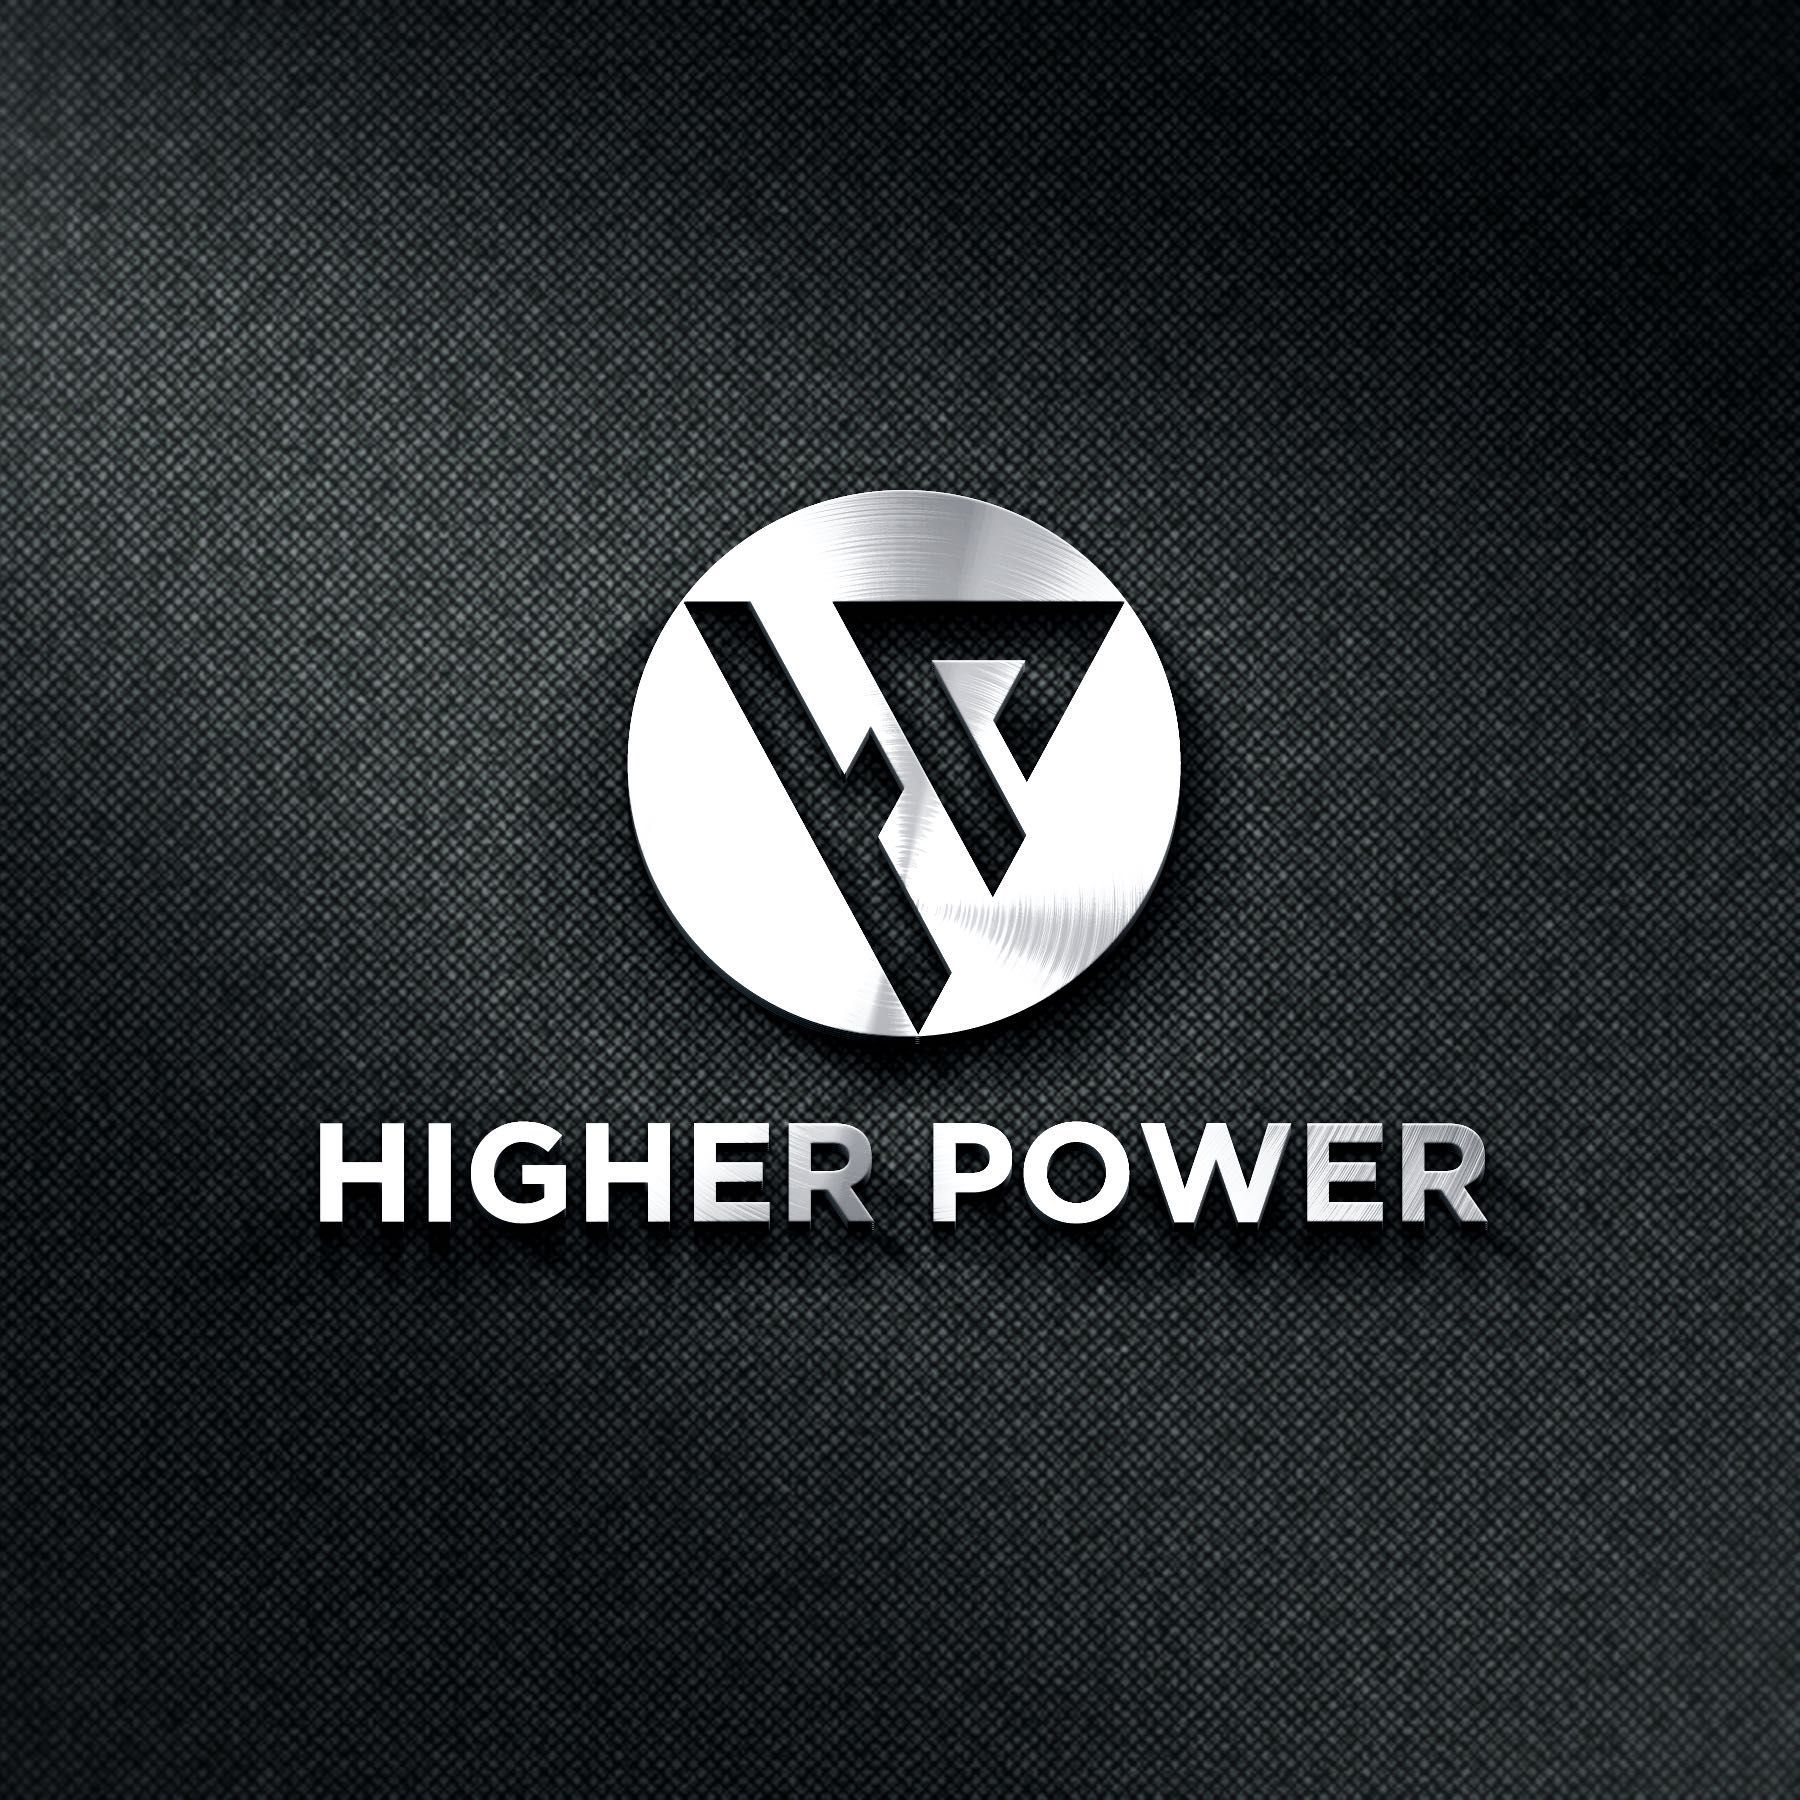 Higher Power LLC, North Hills, North Hills 91343